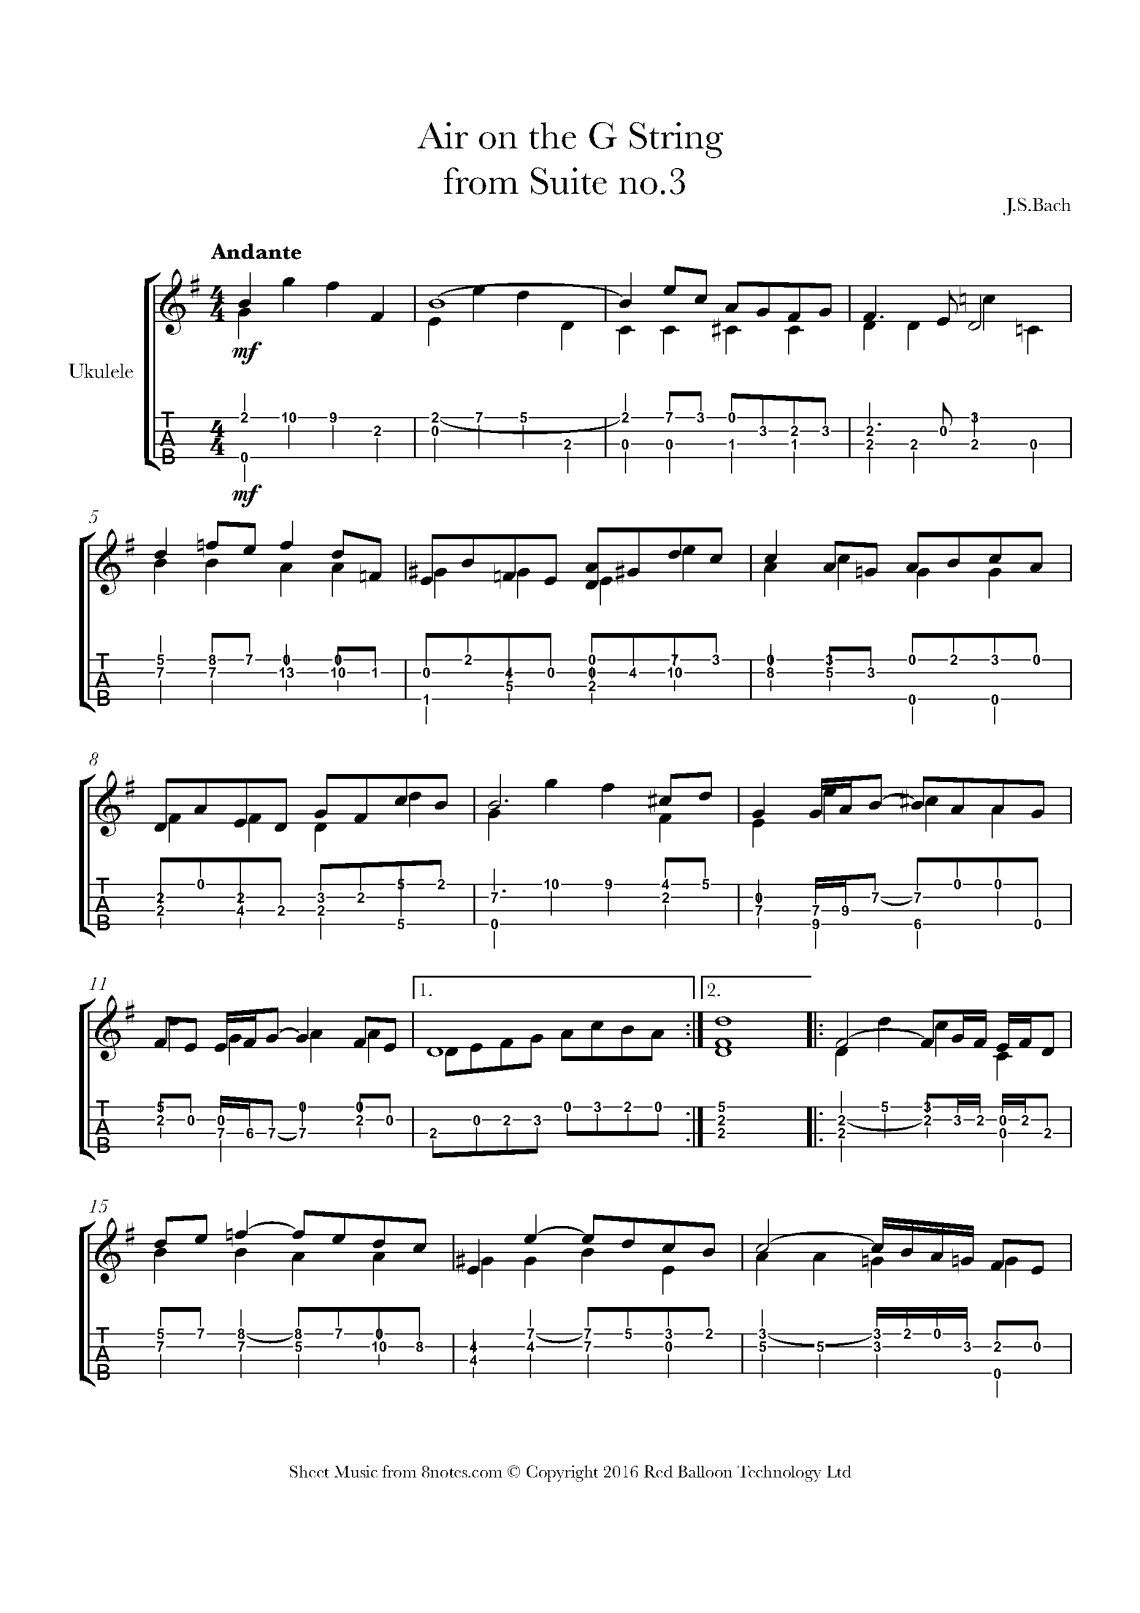 IS Bach on ukulele 用于低 G 调音 + 制表符